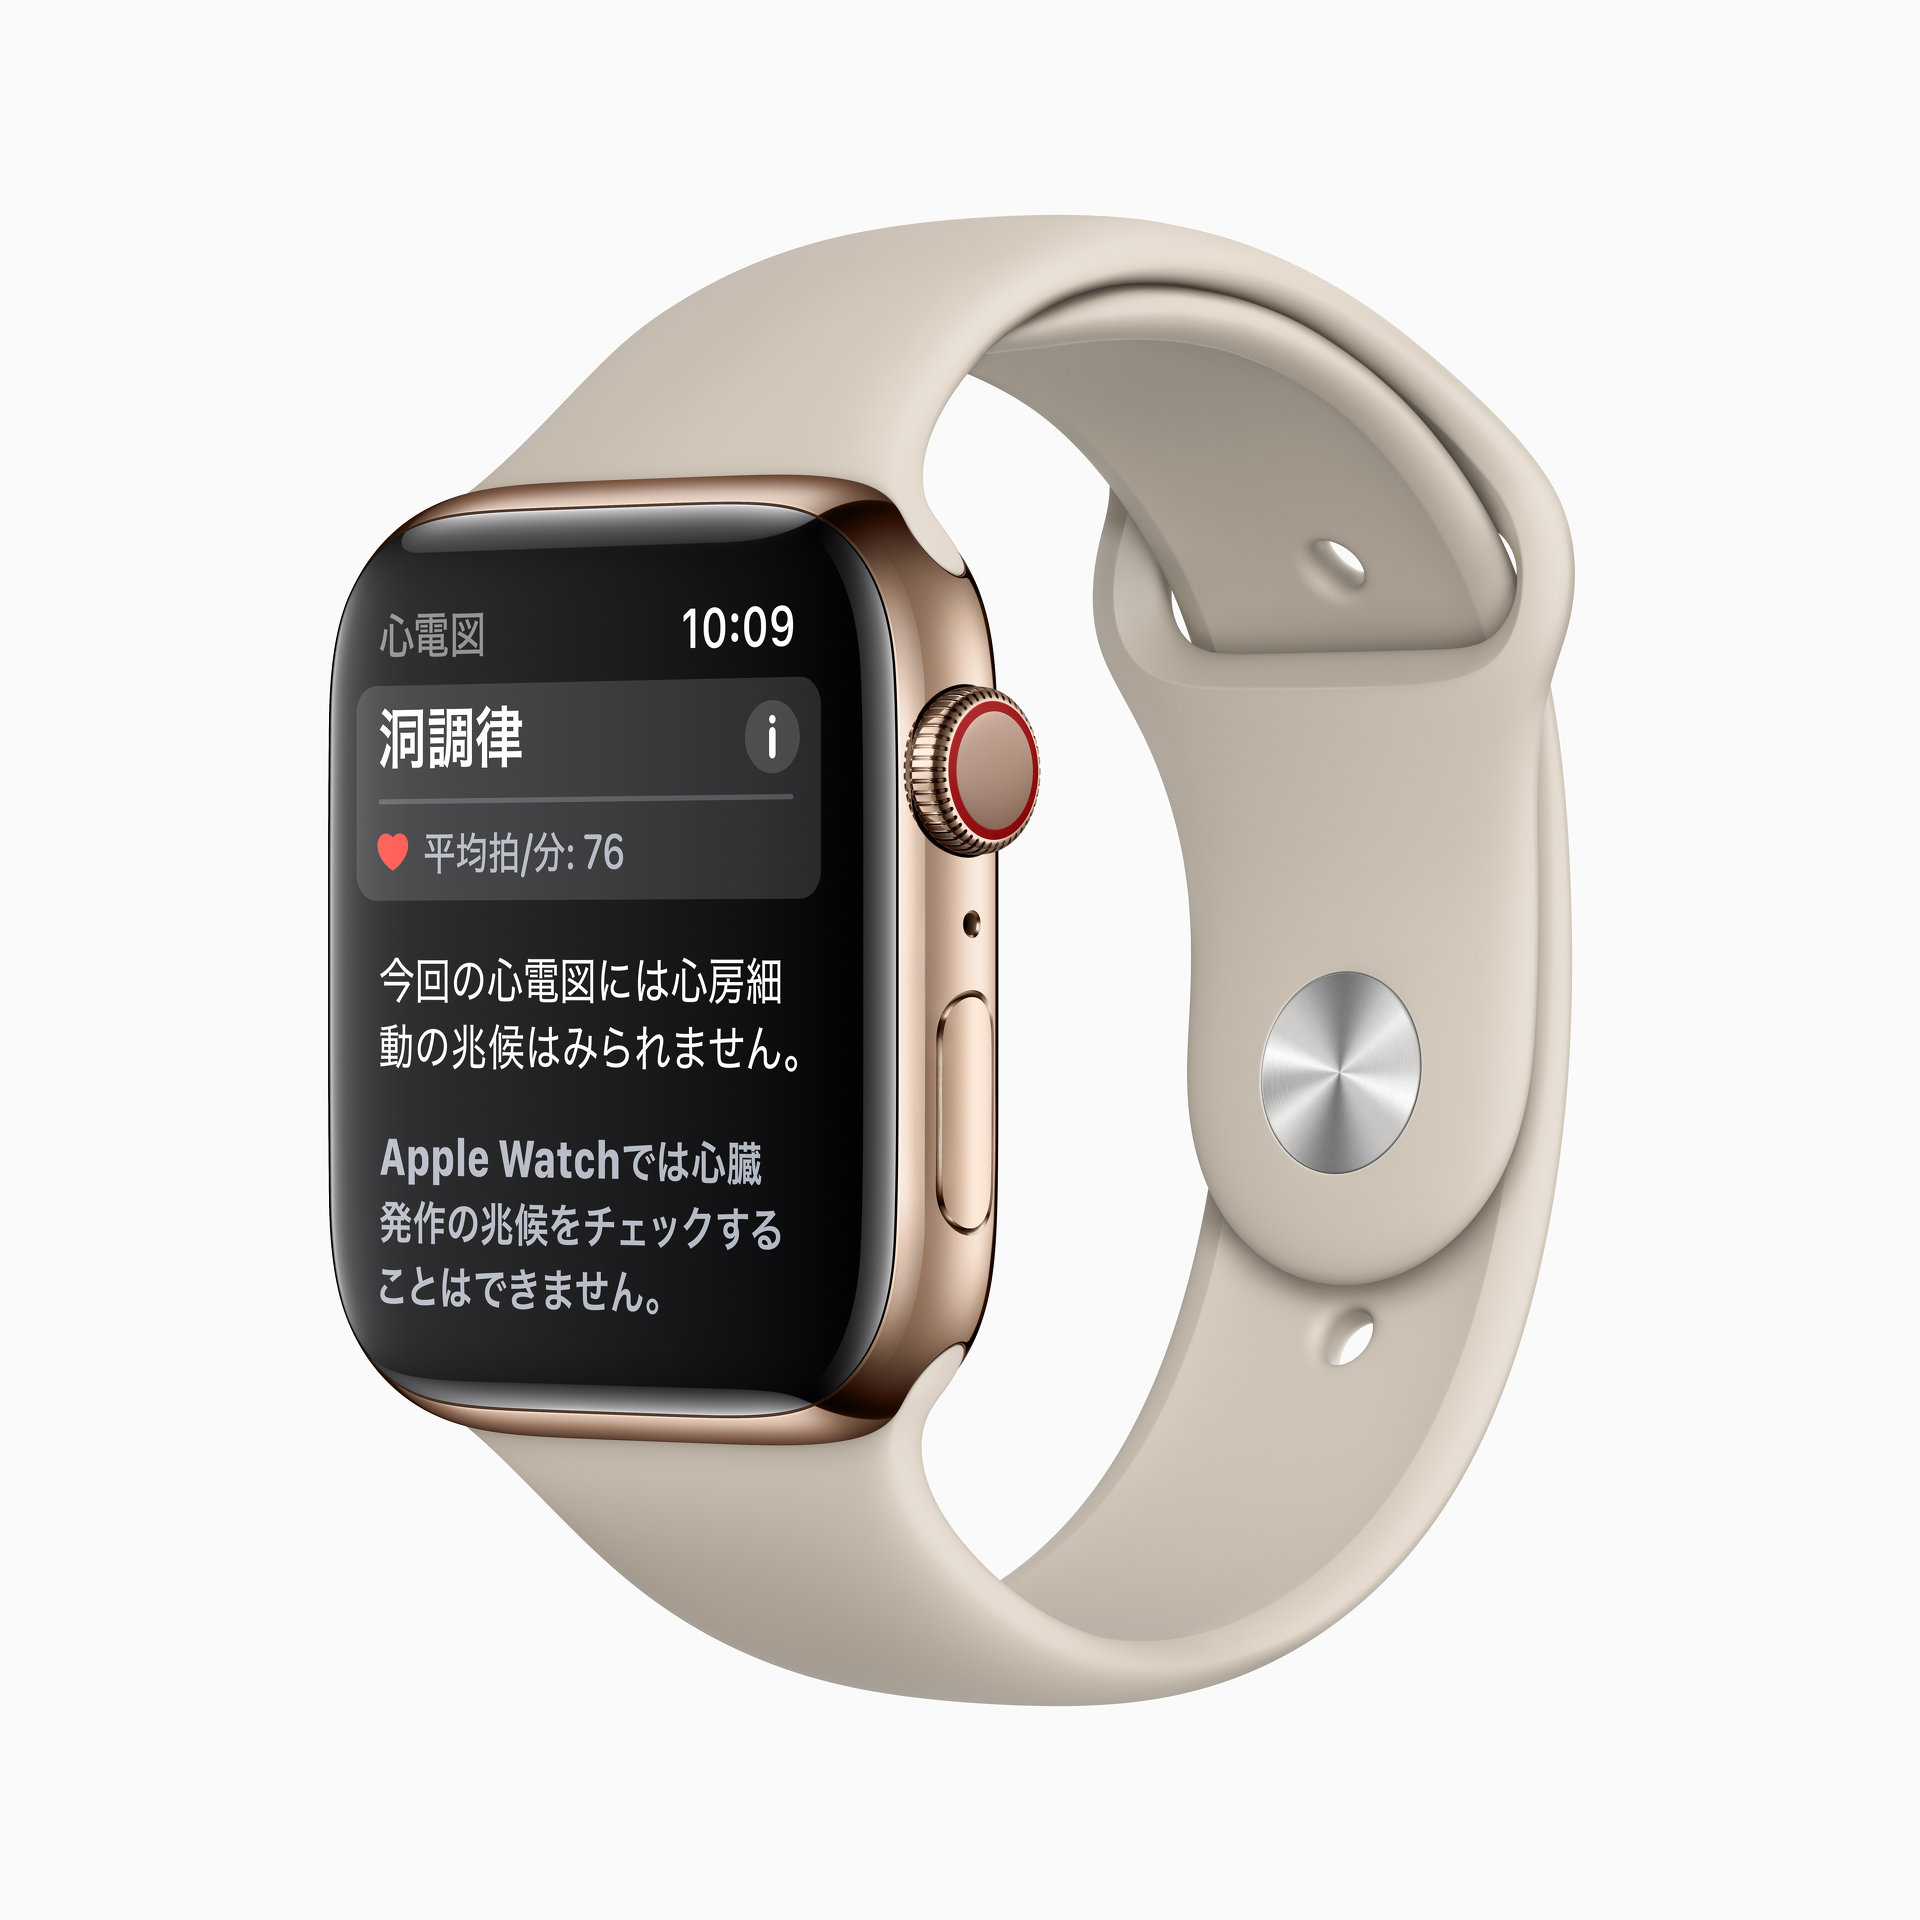 Apple、日本でのApple Watch「心電図」機能を正式予告　Series 3以降で「不規則な心拍リズム」検出も